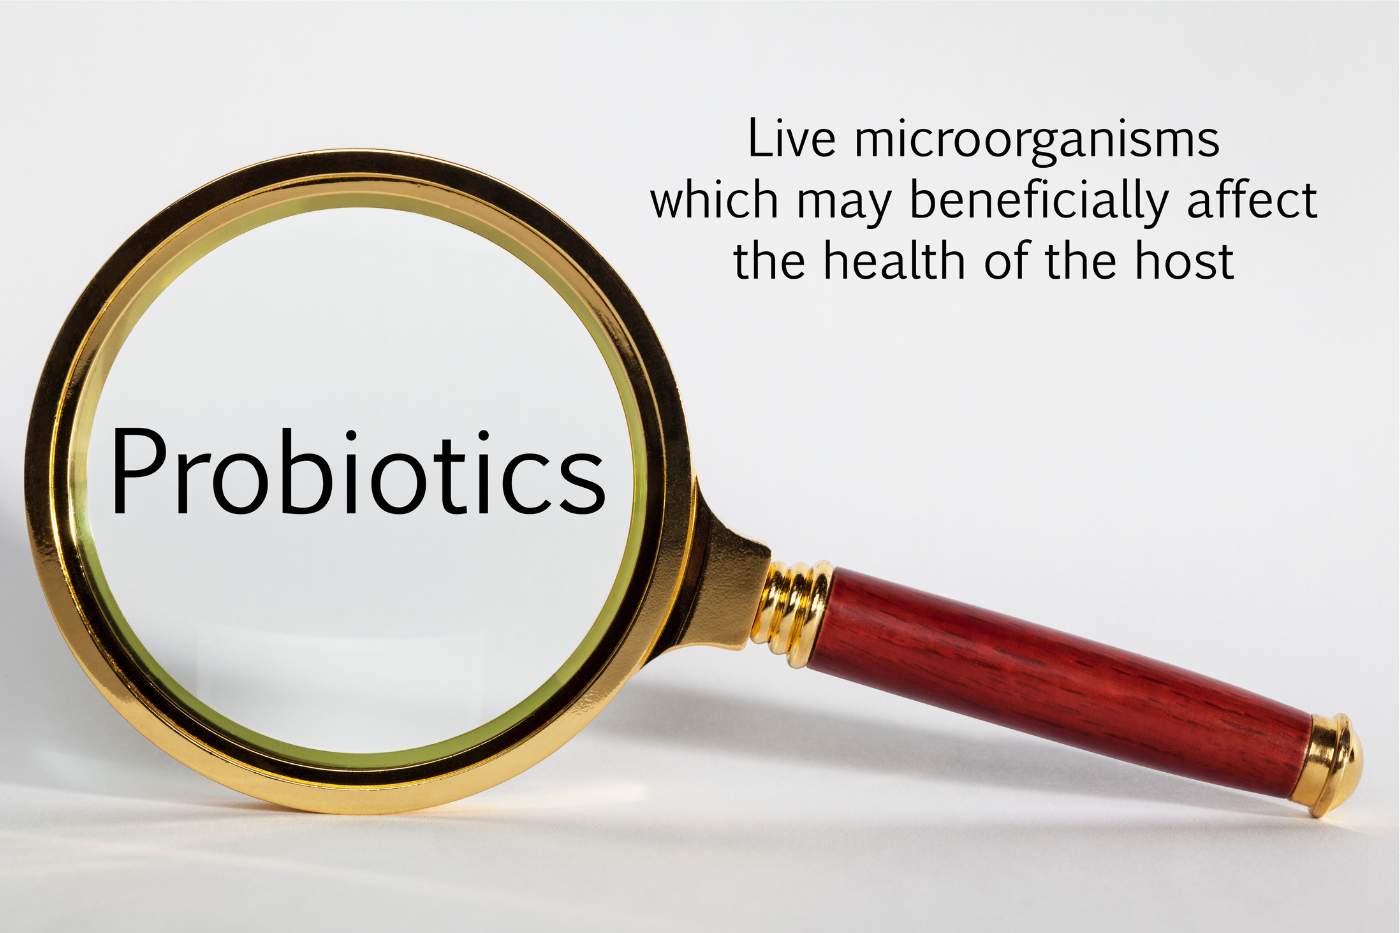 3 categories of probiotics